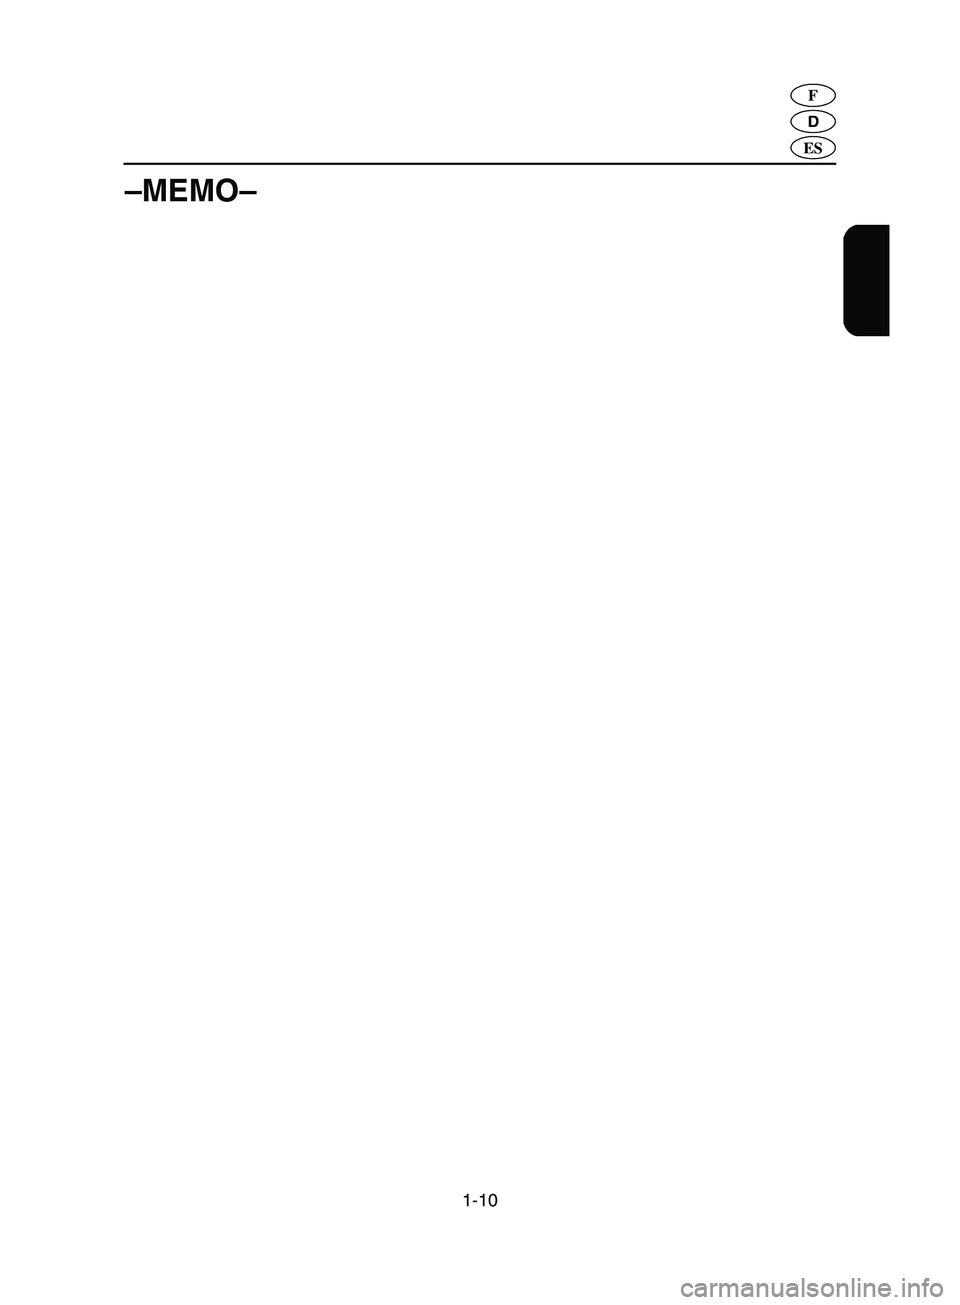 YAMAHA SUPERJET 2002  Manuale de Empleo (in Spanish) 1-10
D
F
ES
–MEMO–
A_F1N-80.book  Page 10  Thursday, July 19, 2001  9:05 AM 